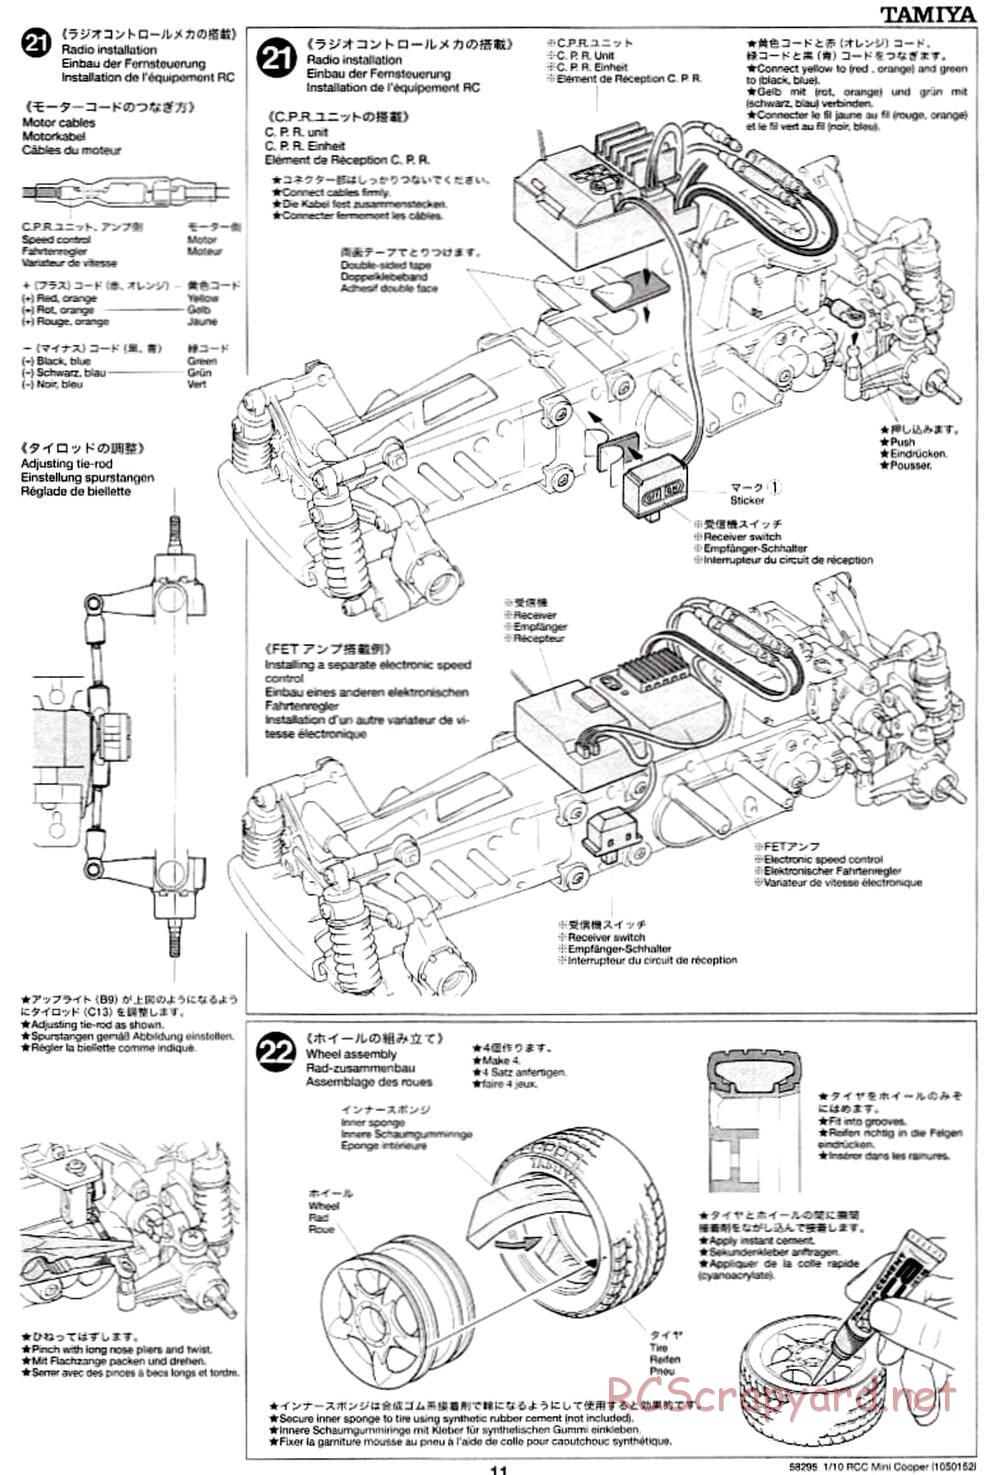 Tamiya - Mini Cooper - M03L Chassis - Manual - Page 10